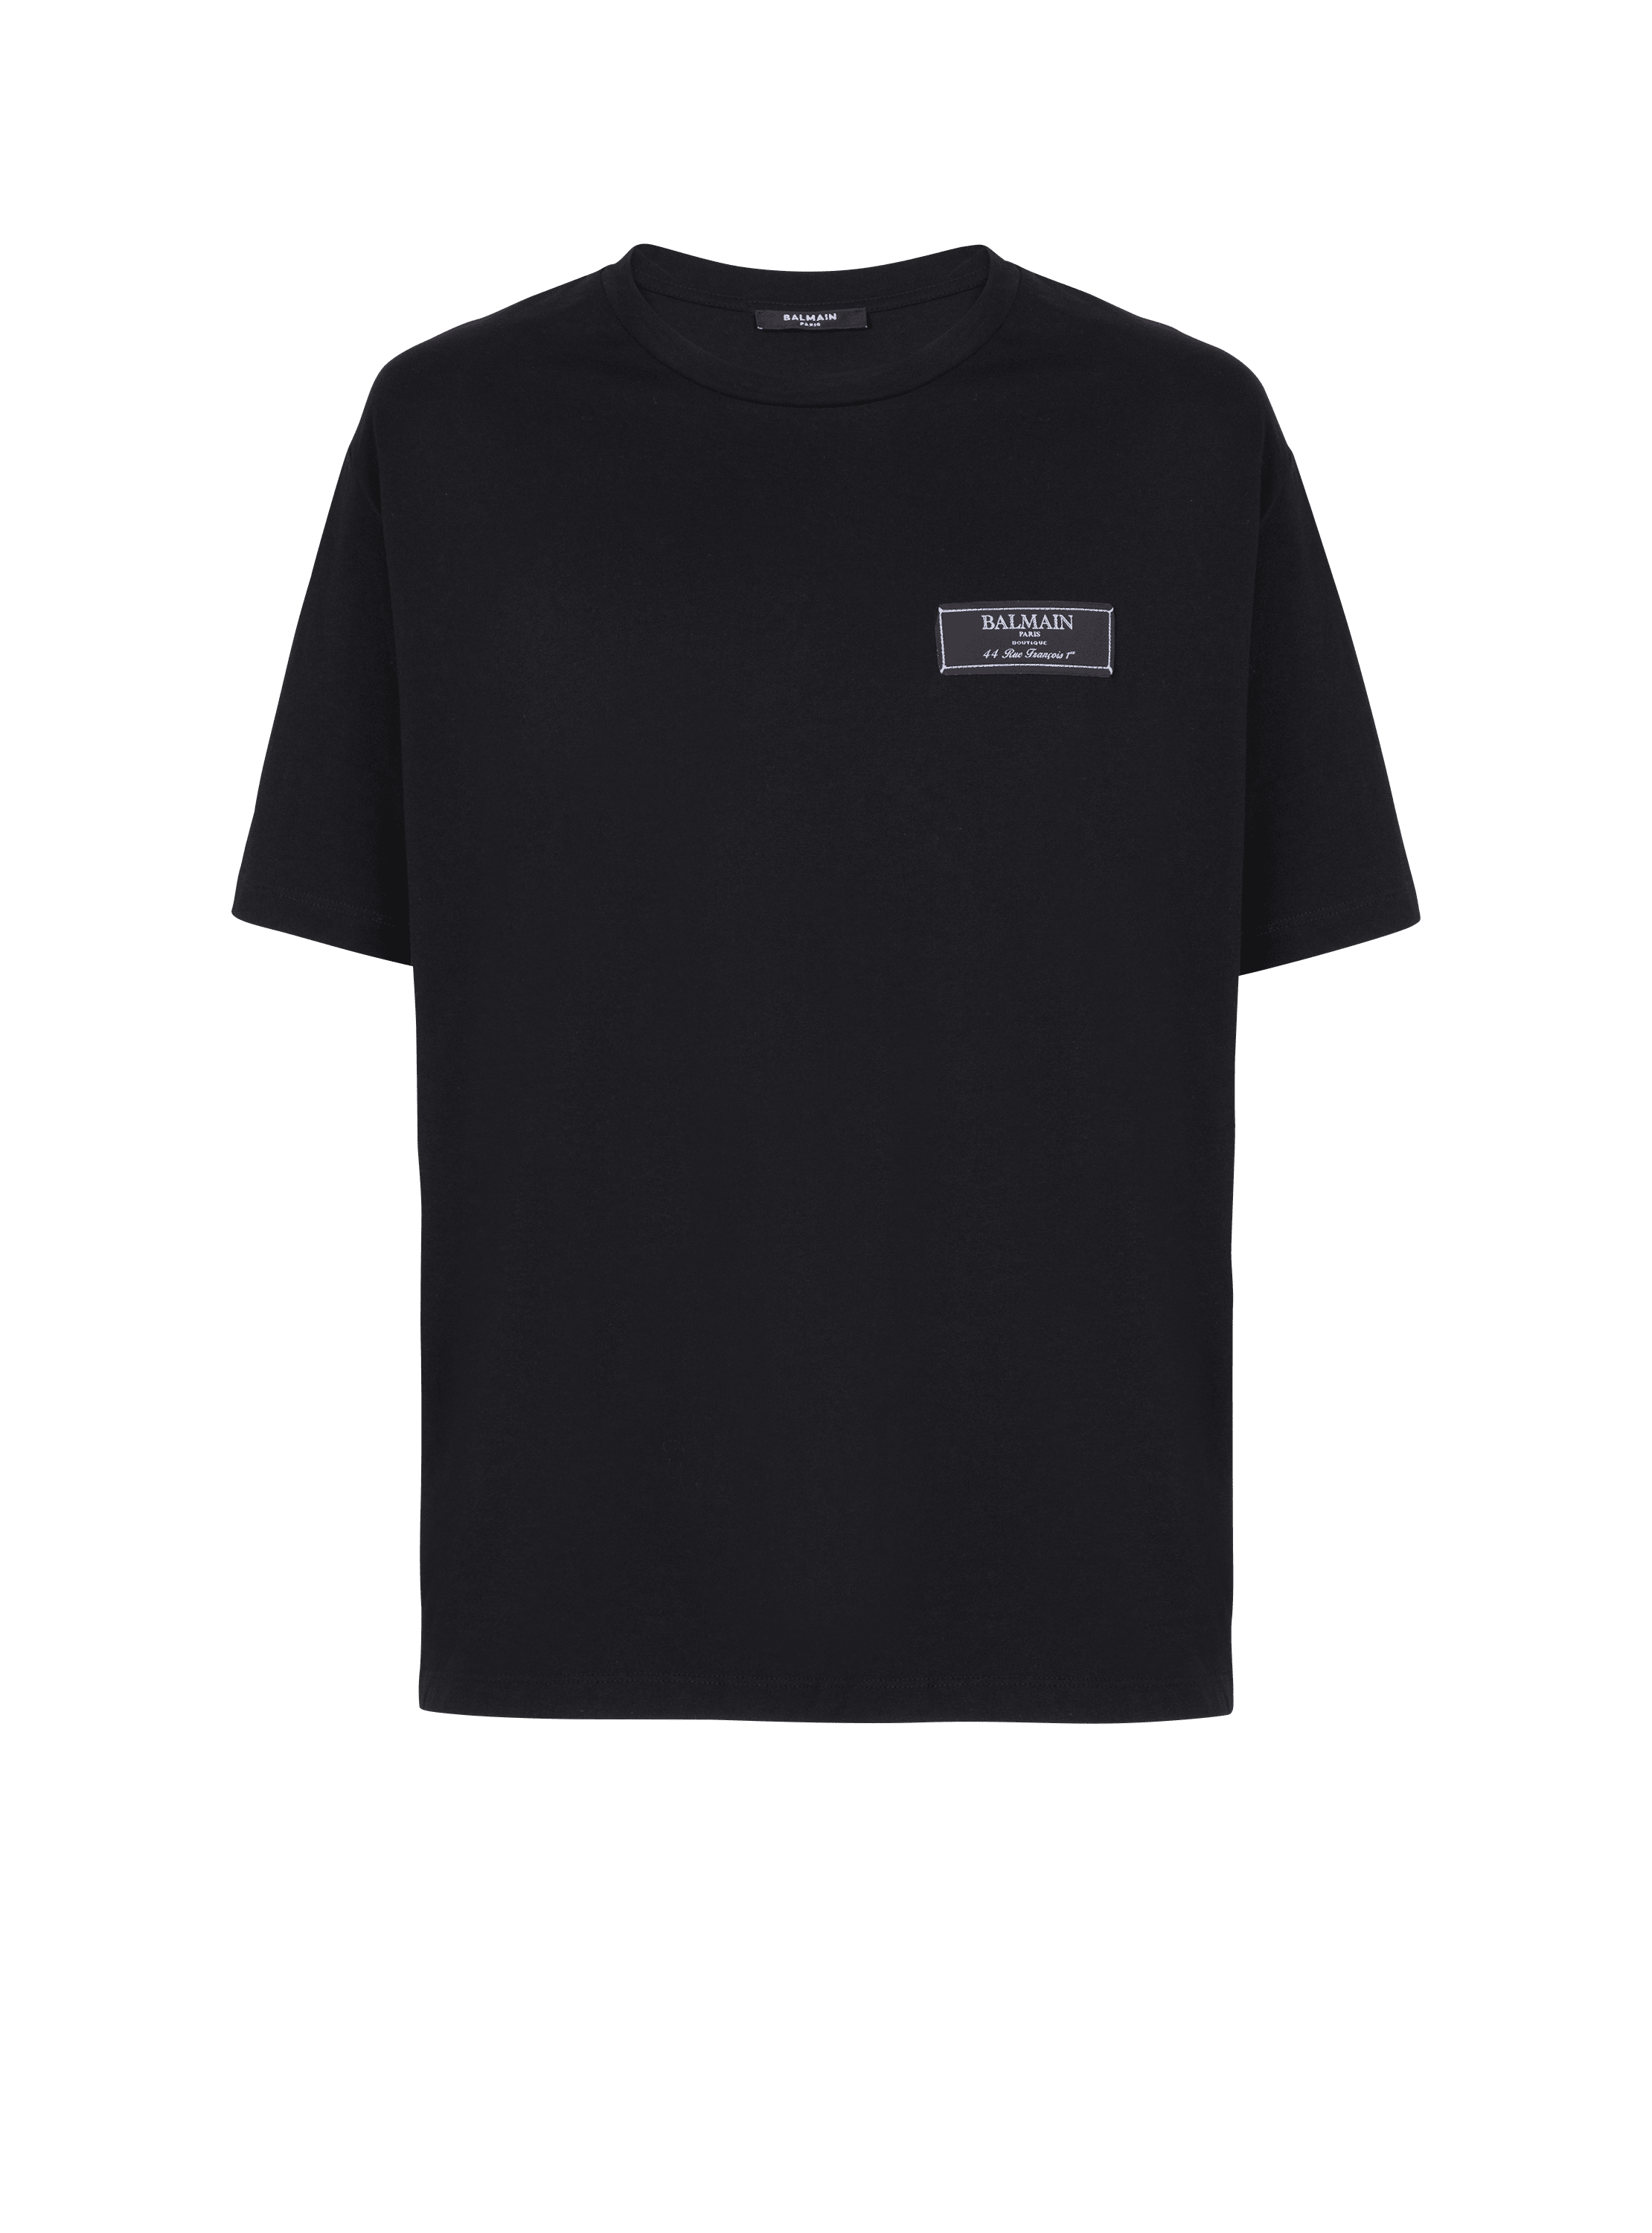 T-shirt with Balmain Paris label, black, hi-res